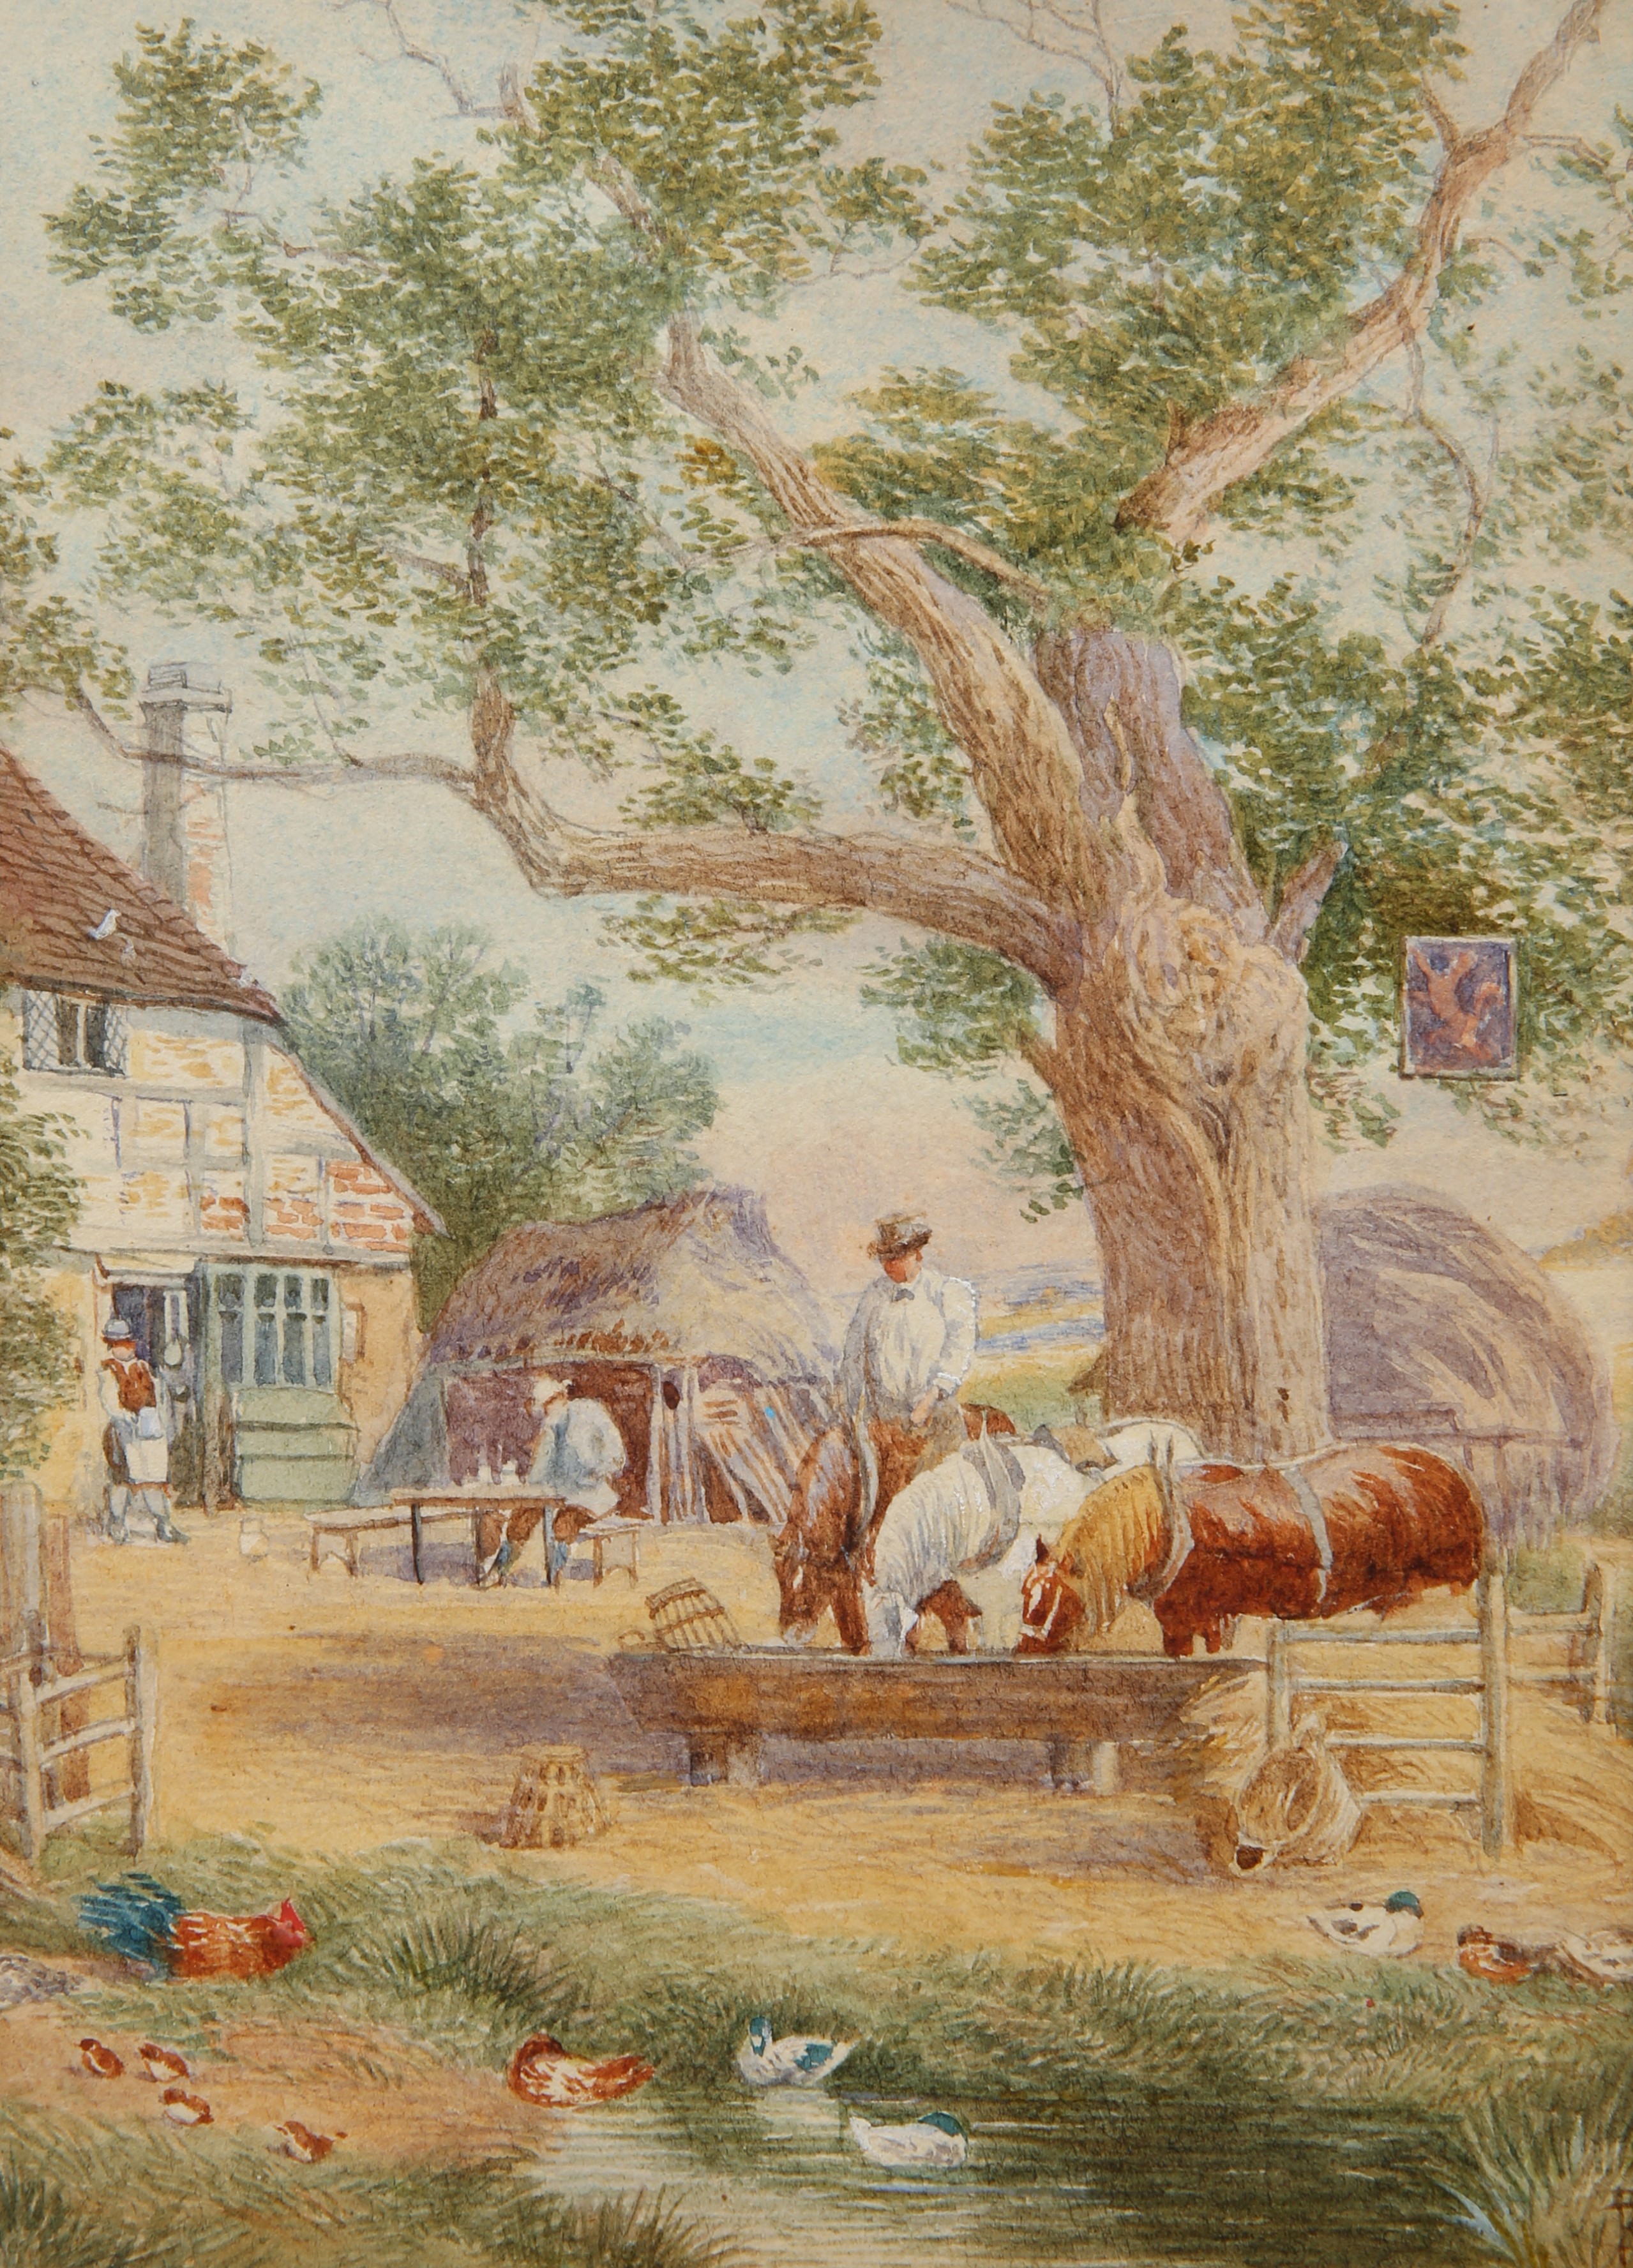 FOLLOWER OF MILES BIRKET FOSTER (1825-1899), RUSTIC SCENE